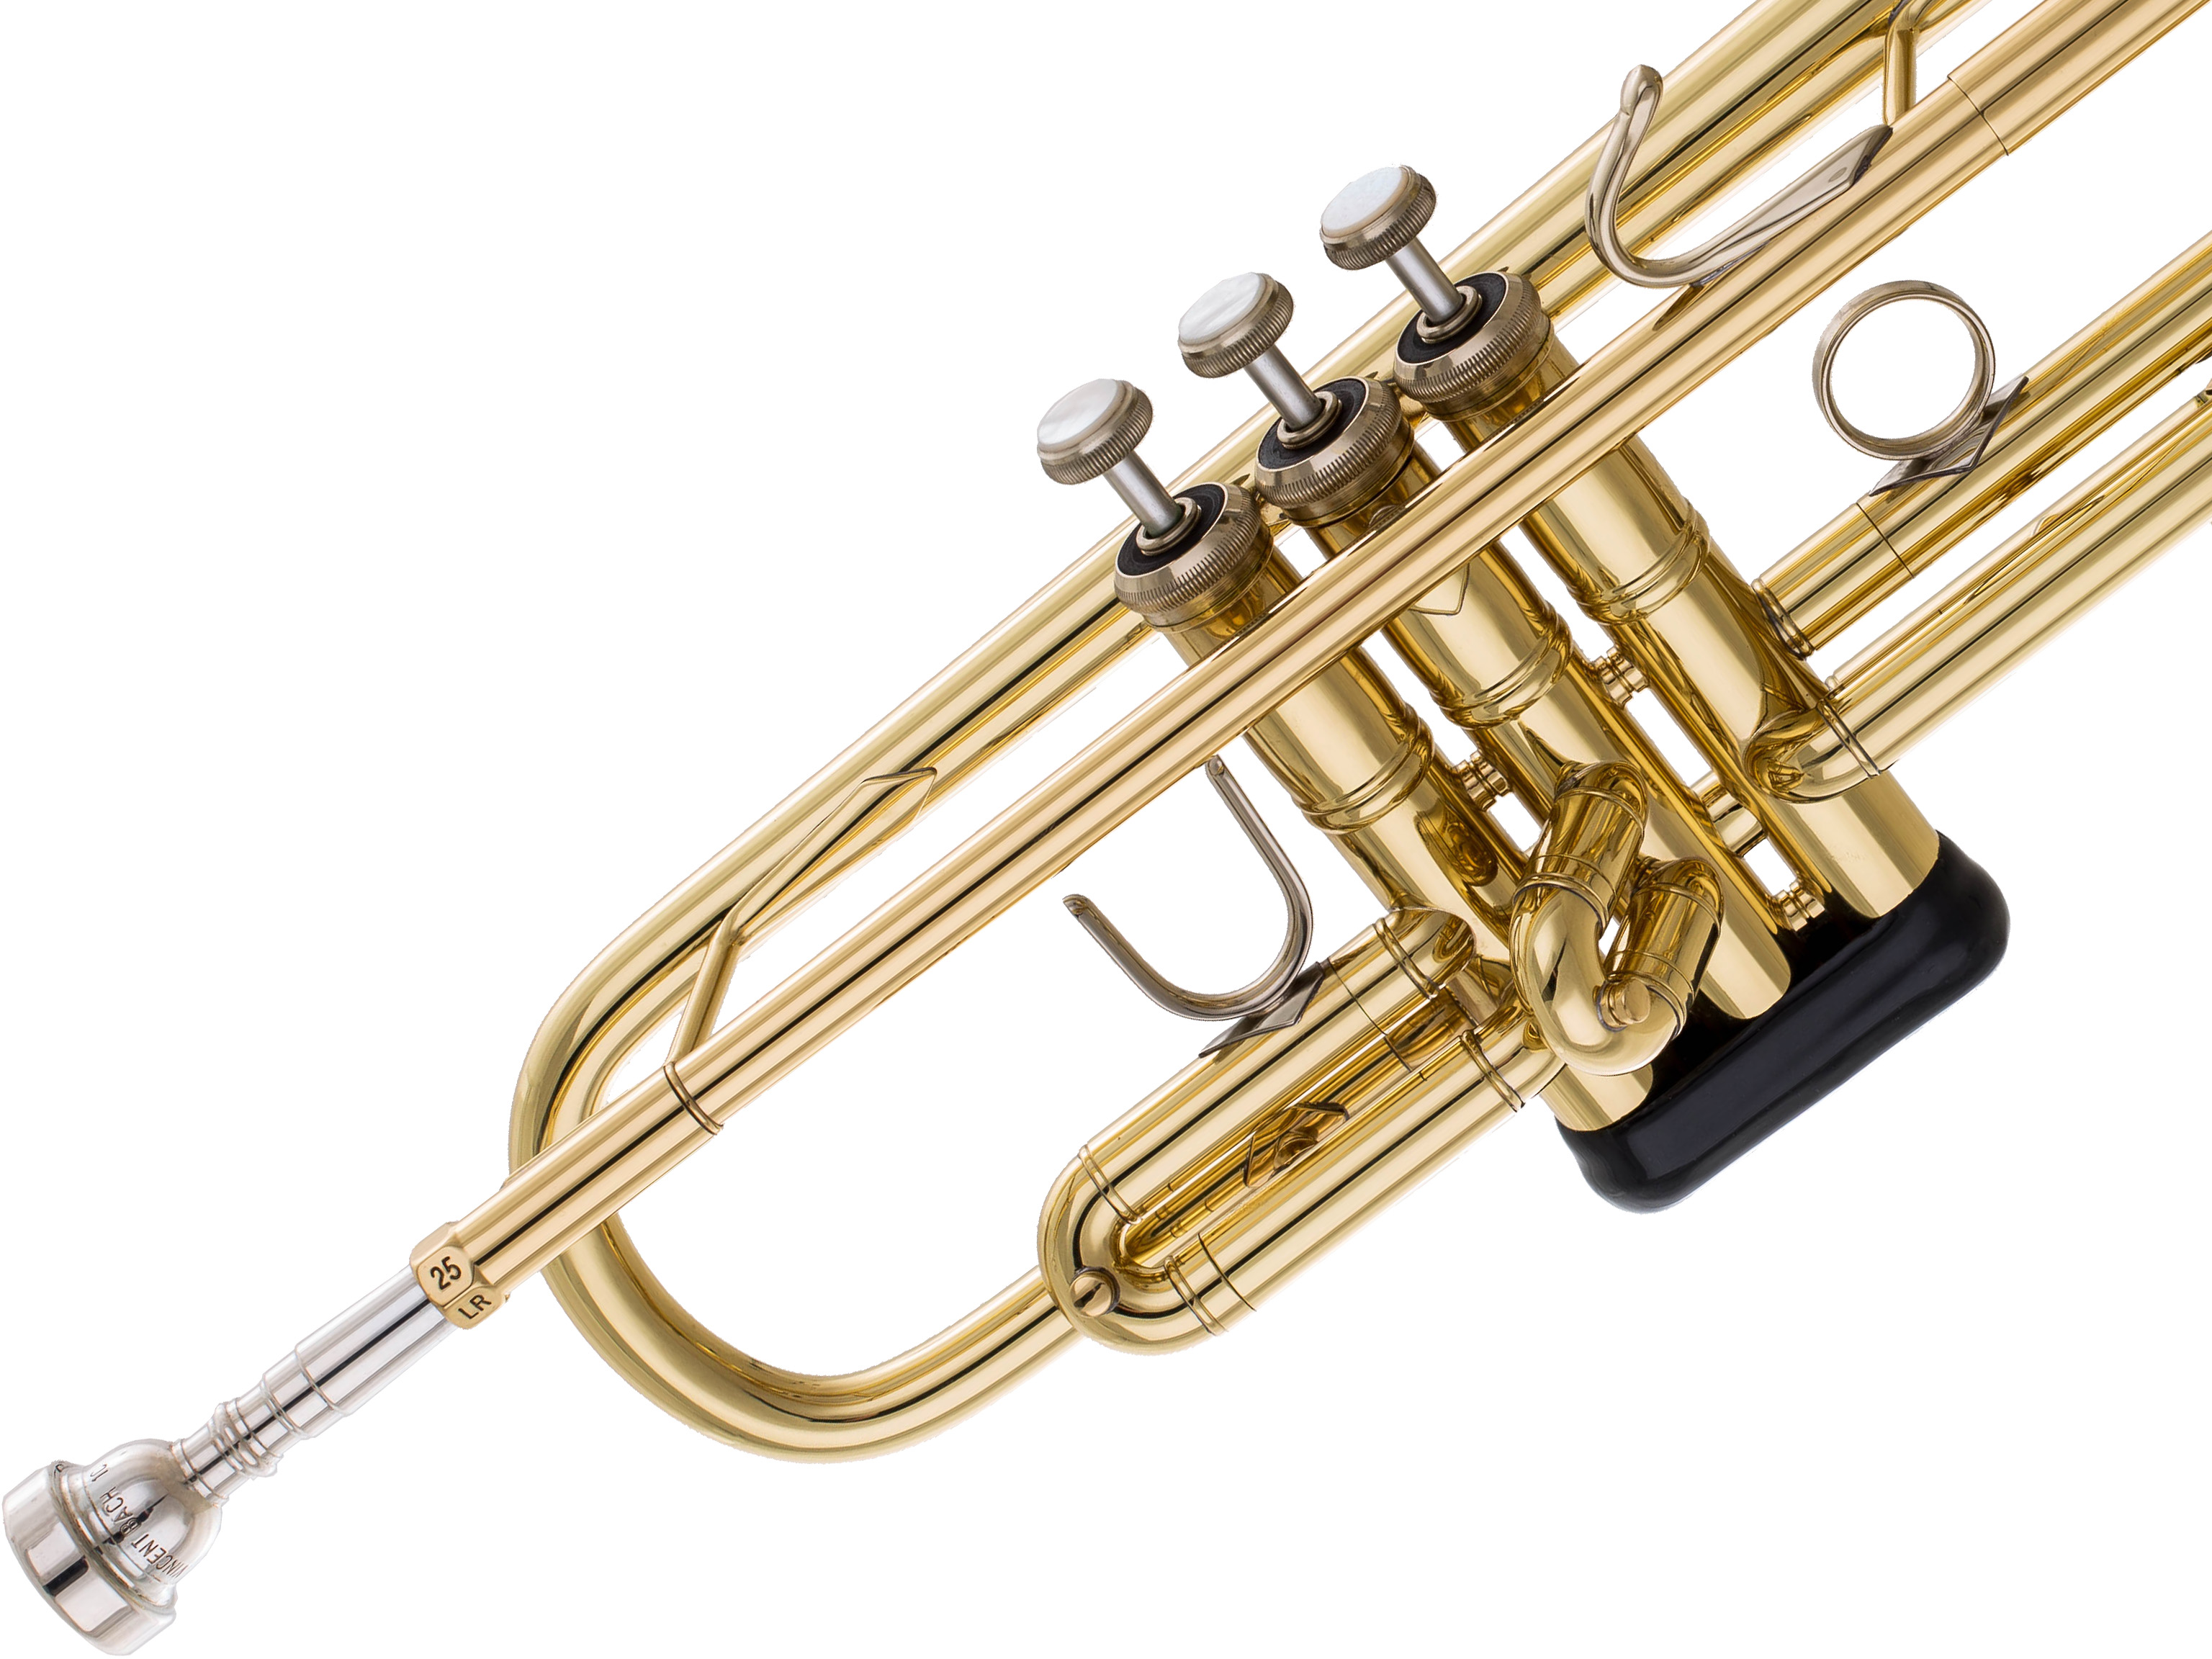 Bach LR180-43G Trompete Goldmessing